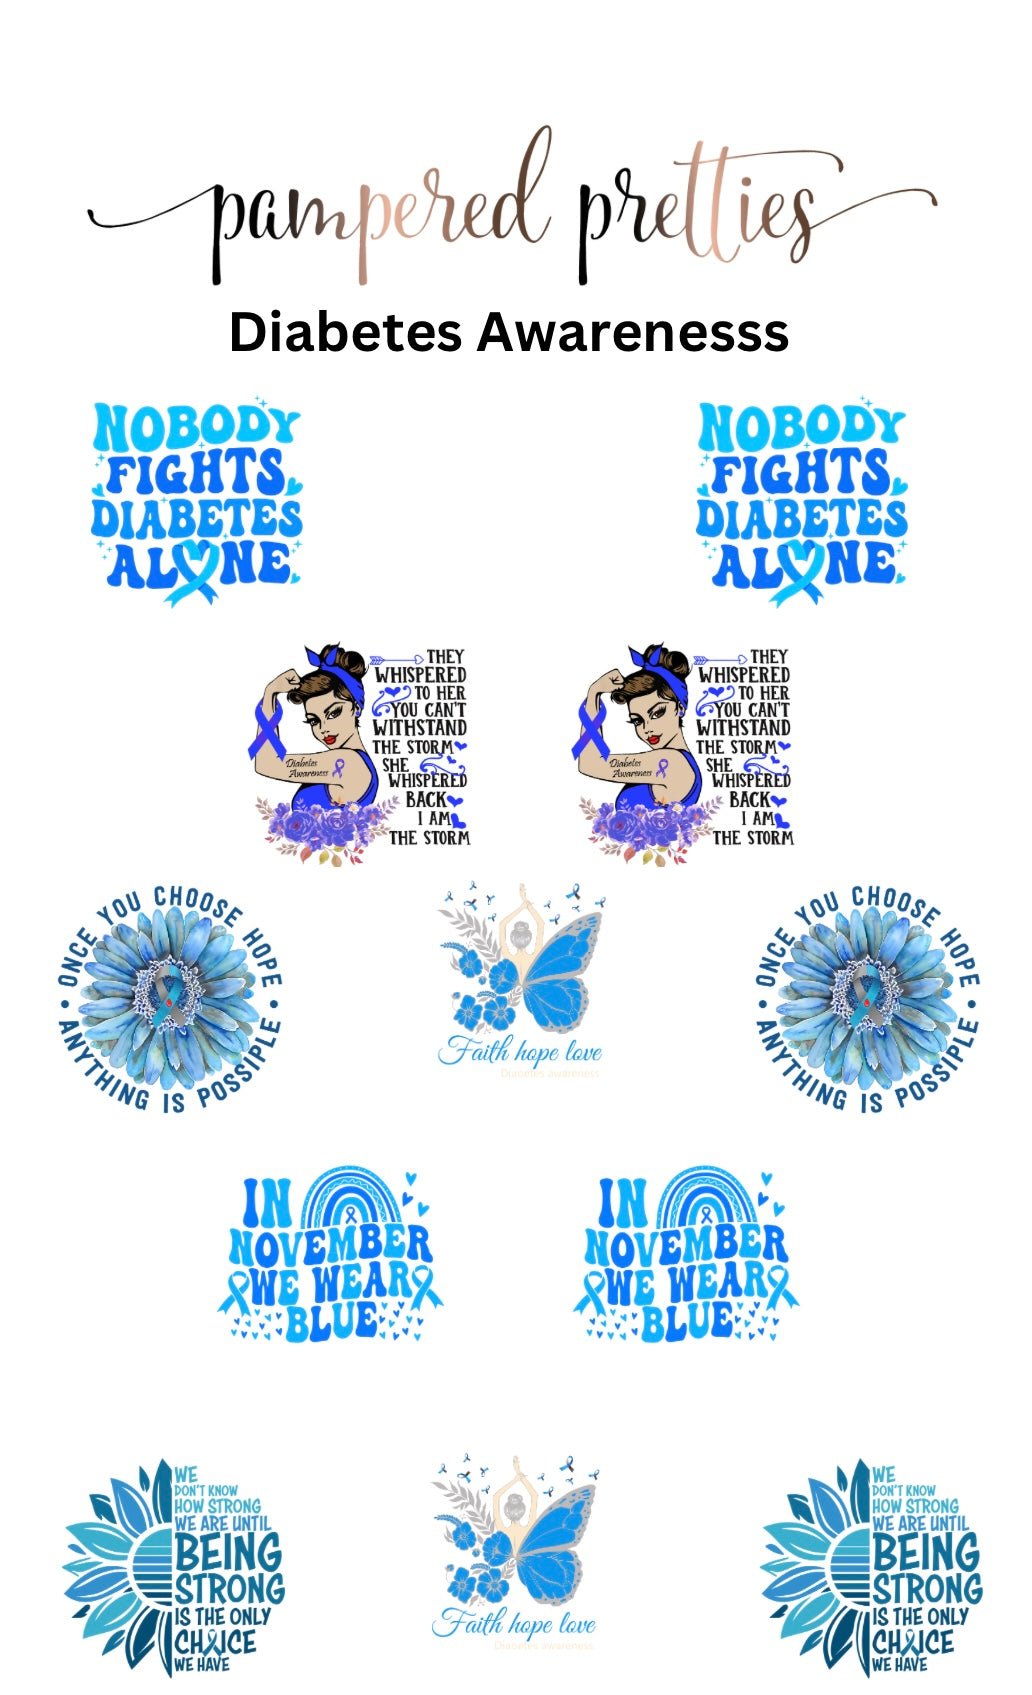 Diabetes Awareness - Pampered Pretties